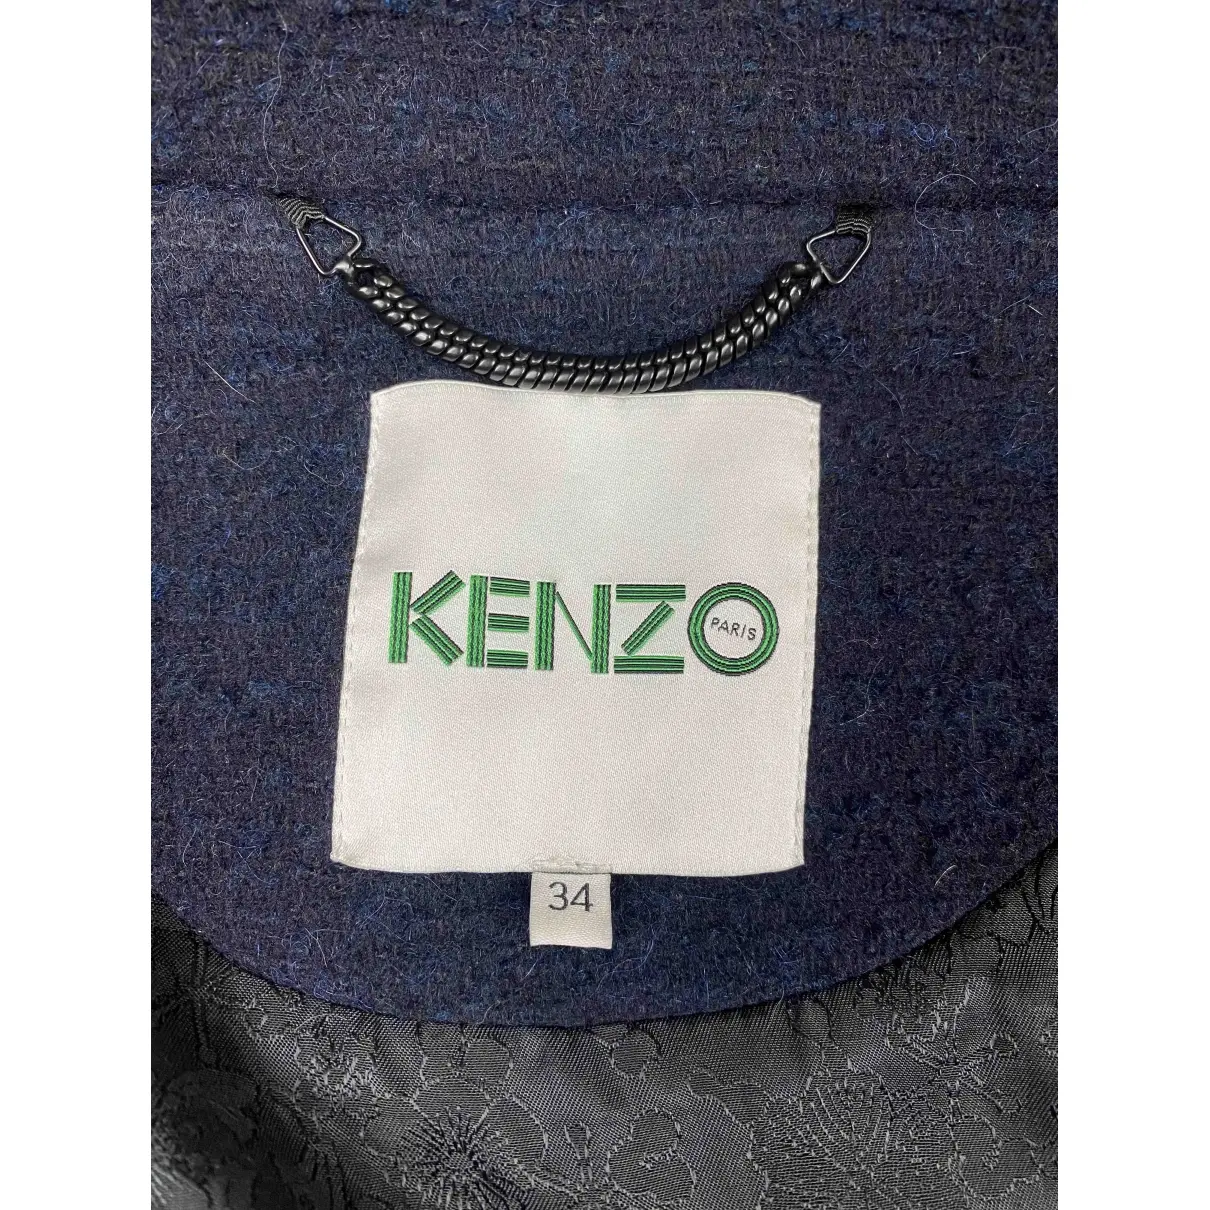 Buy Kenzo Wool coat online